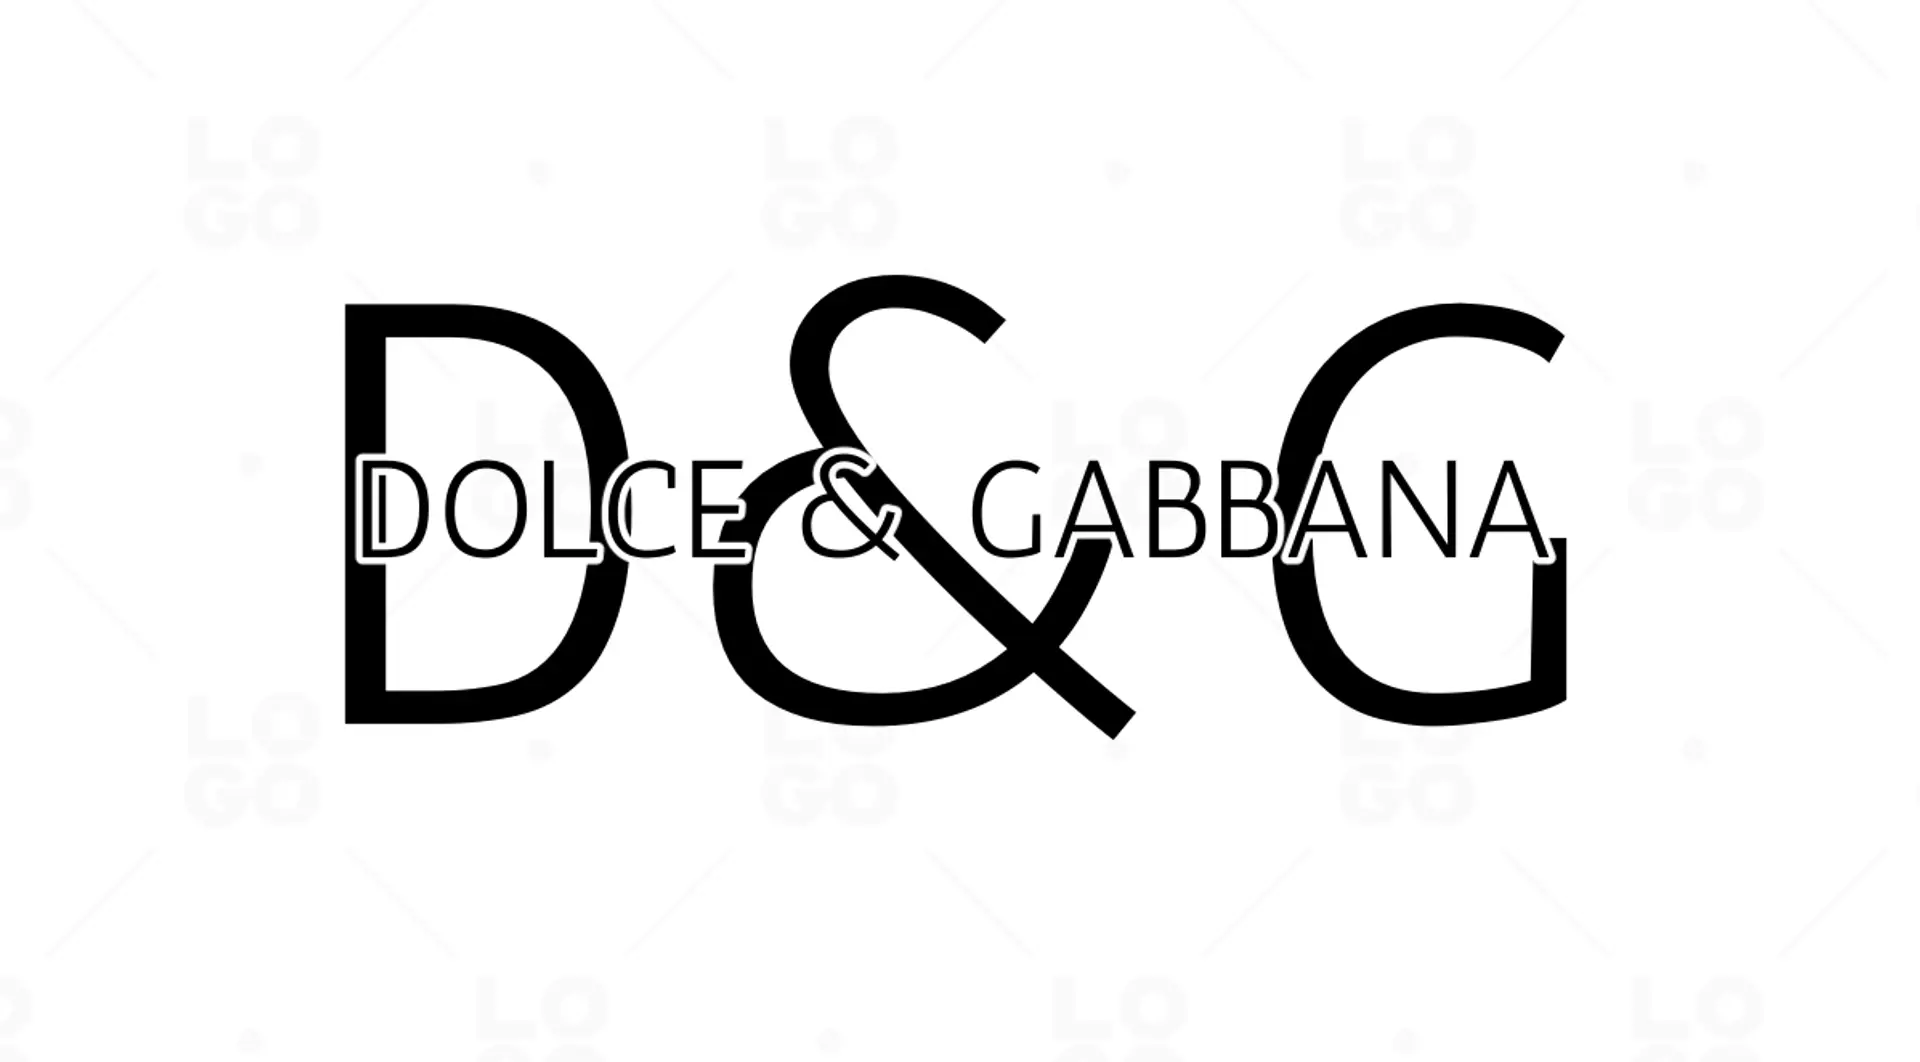 Dolce & Gabbana logo variation